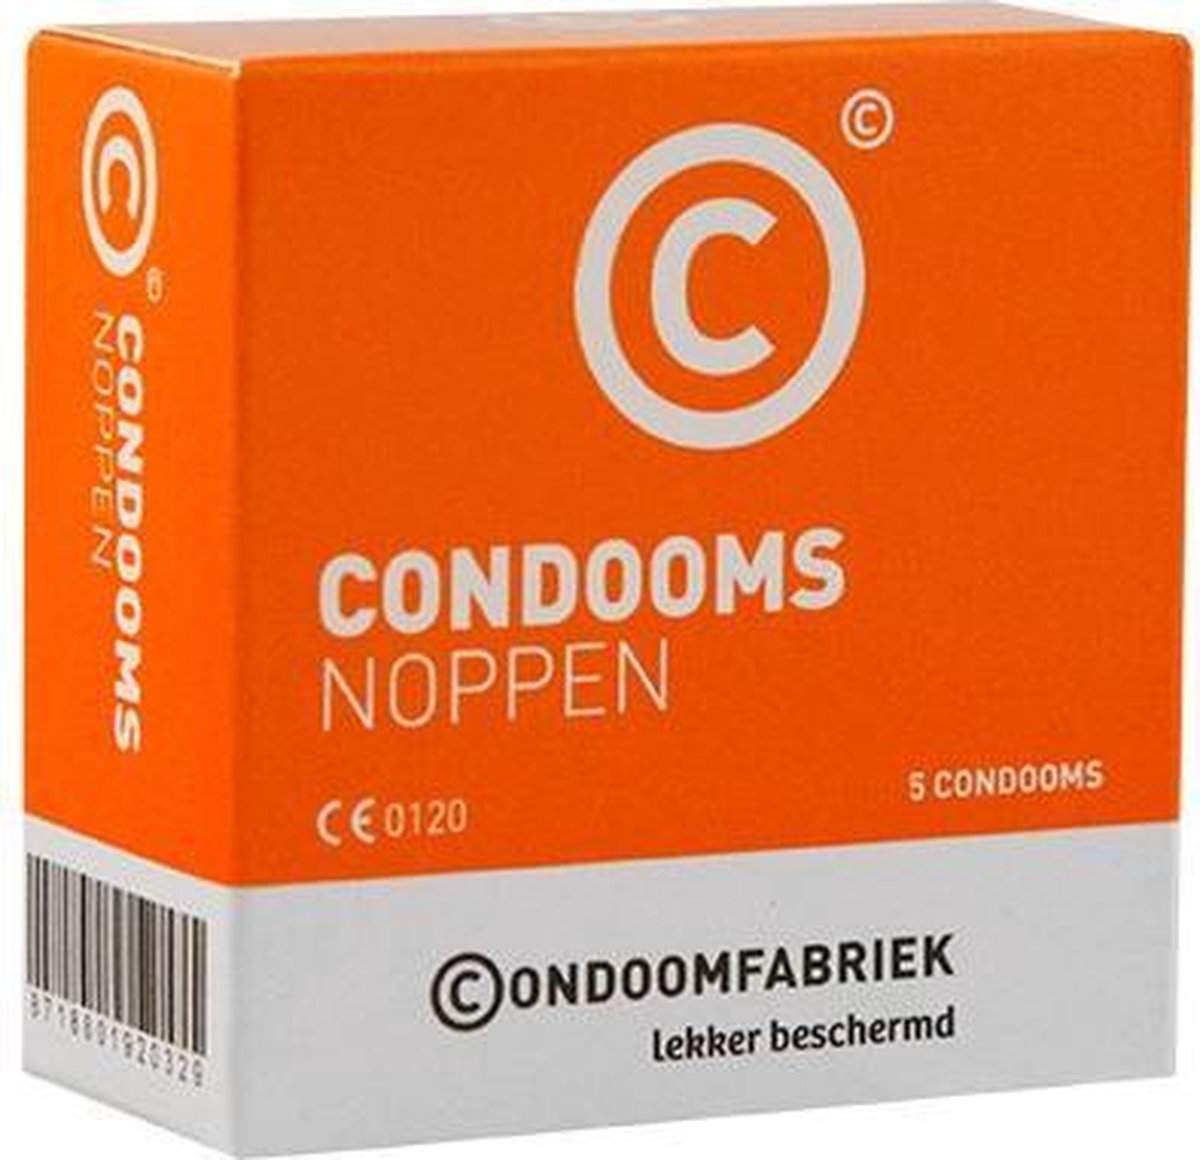 Condoomfabriek - Noppen condoom - 5 stuks